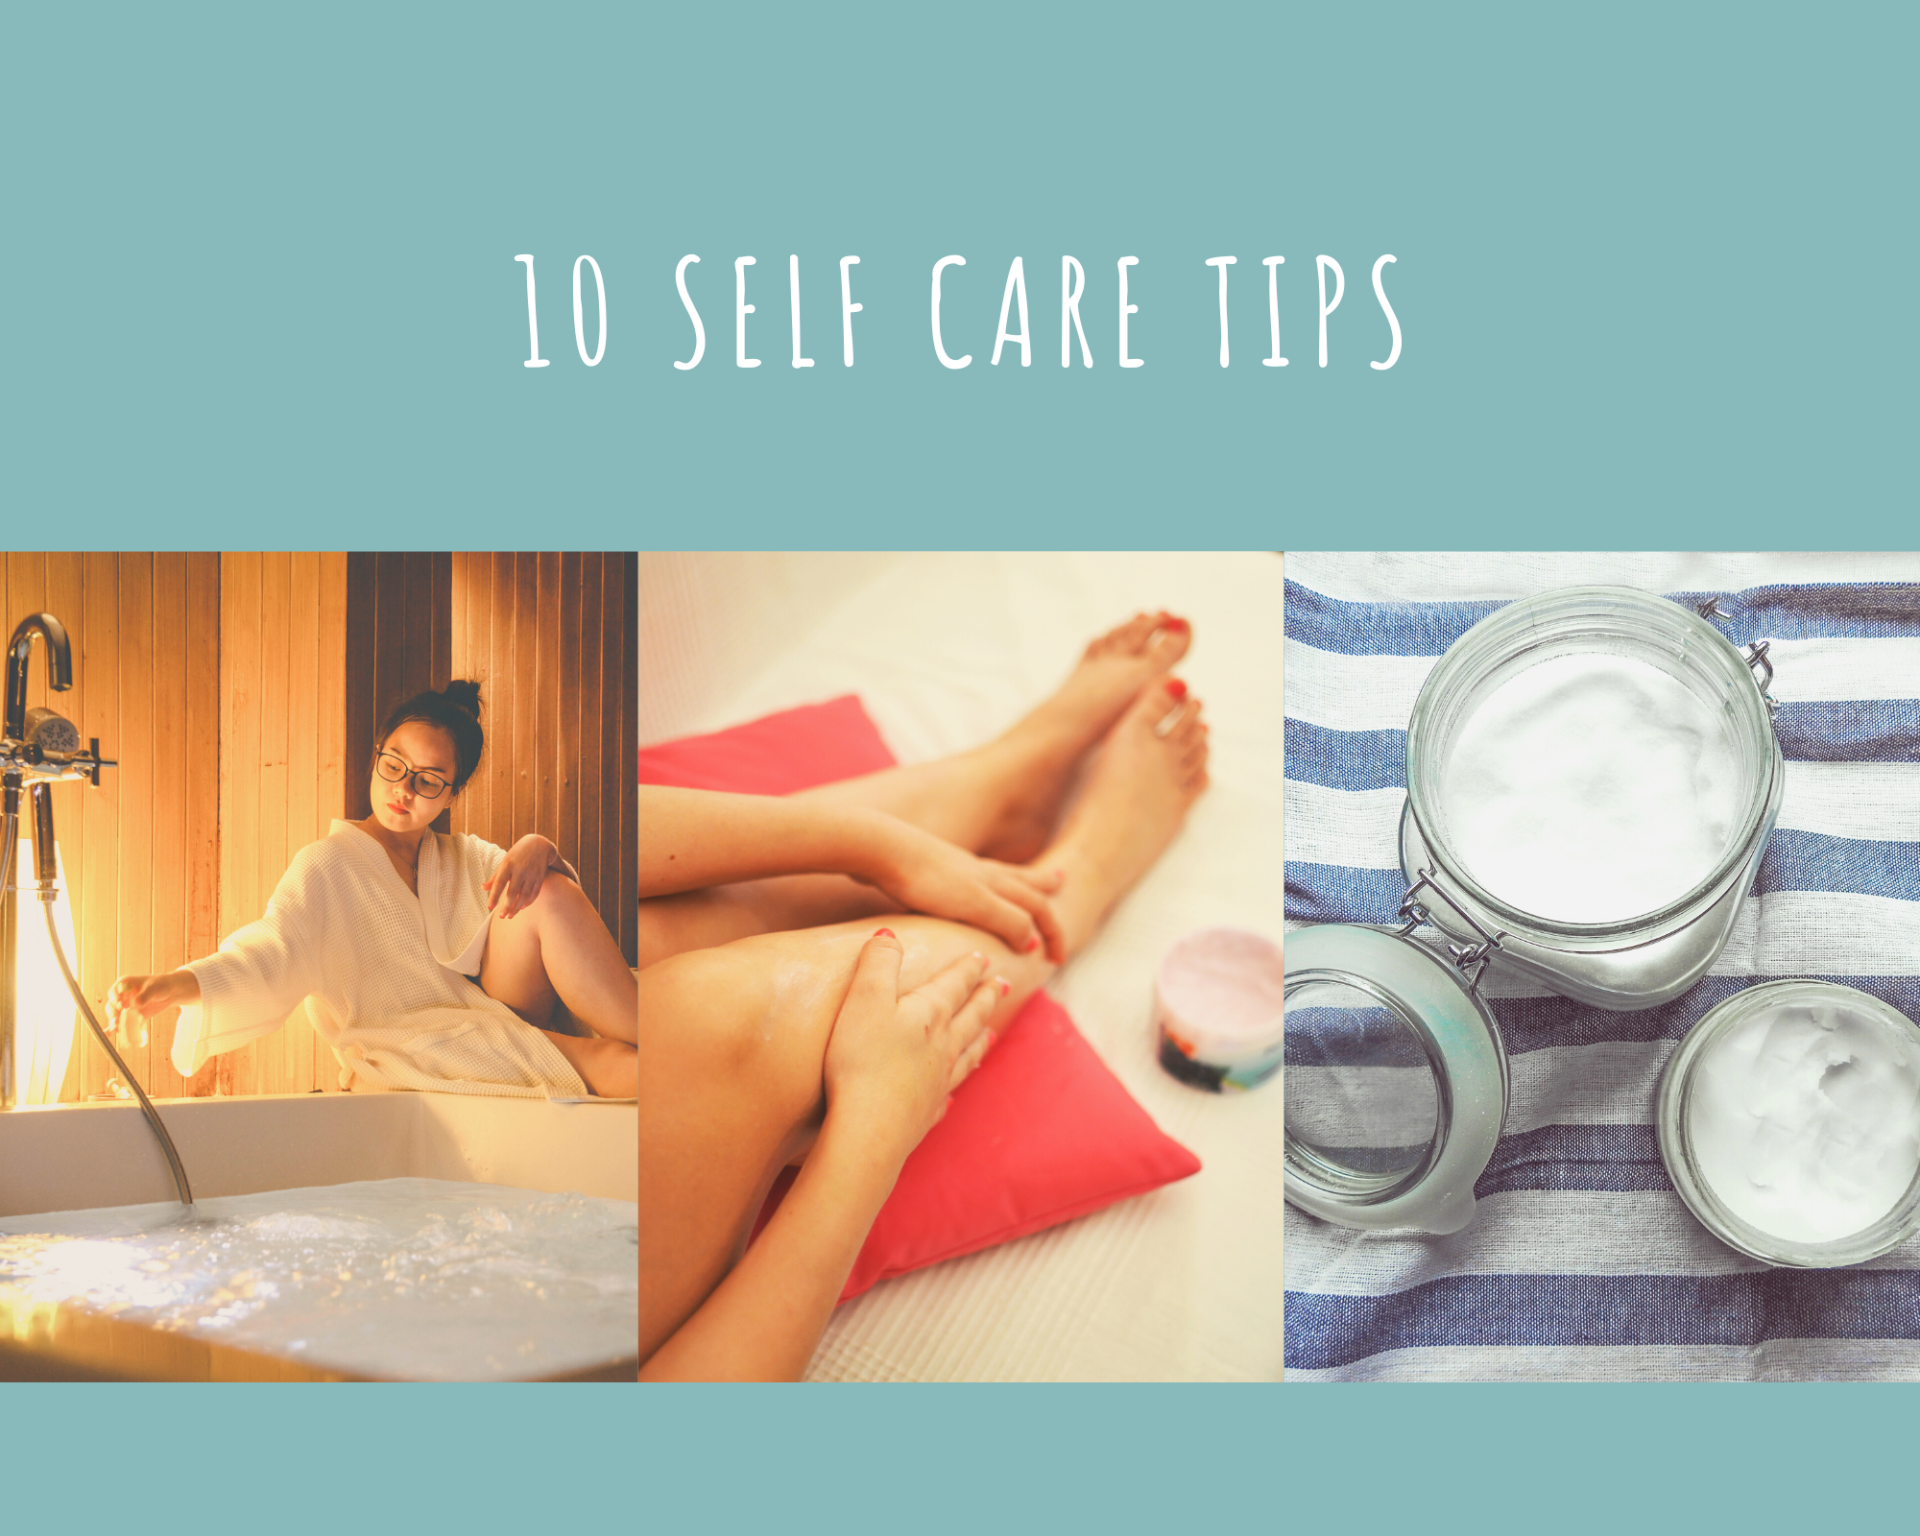 10 self care tips